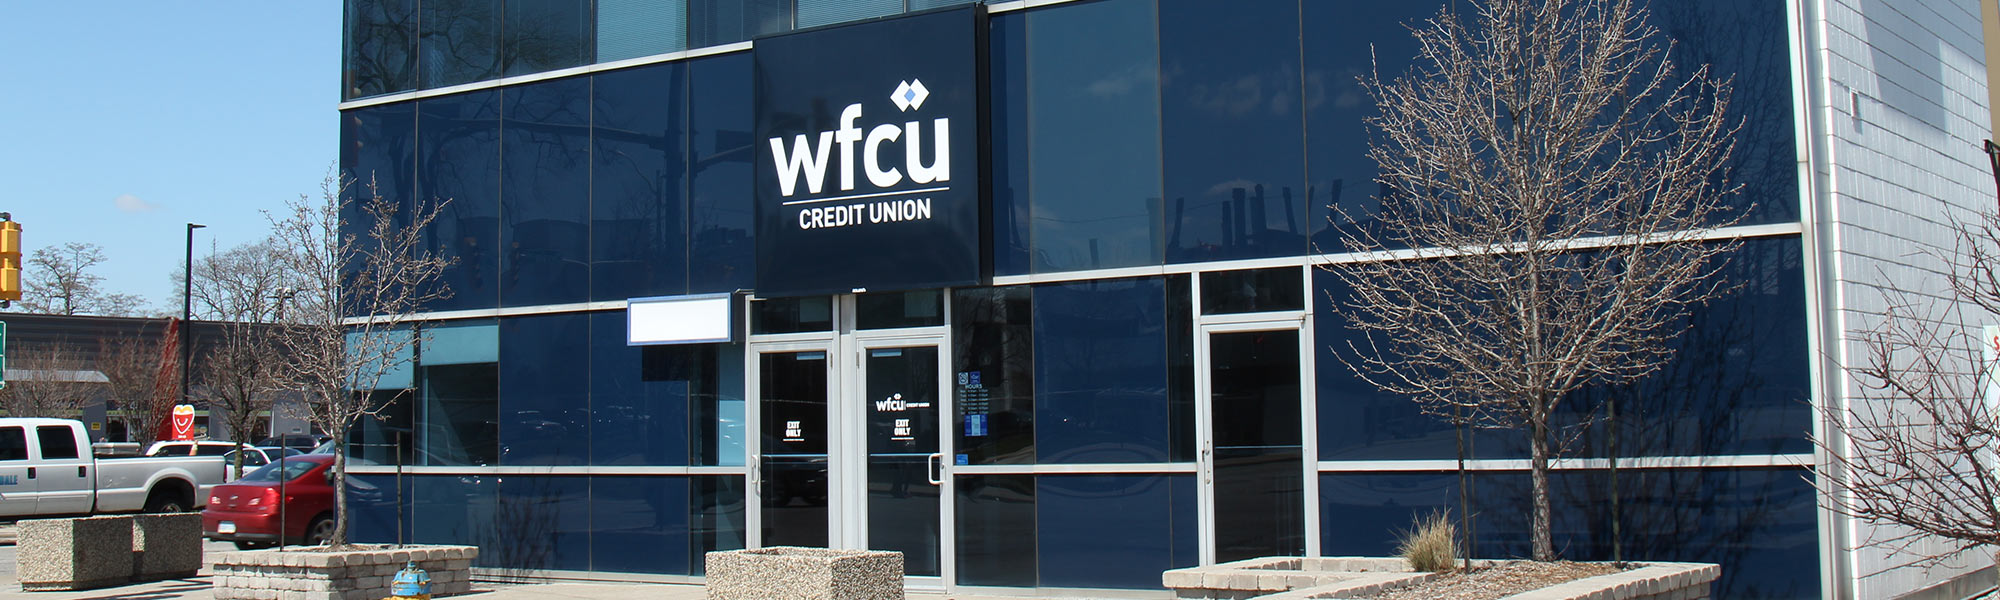 WFCU Main branch building